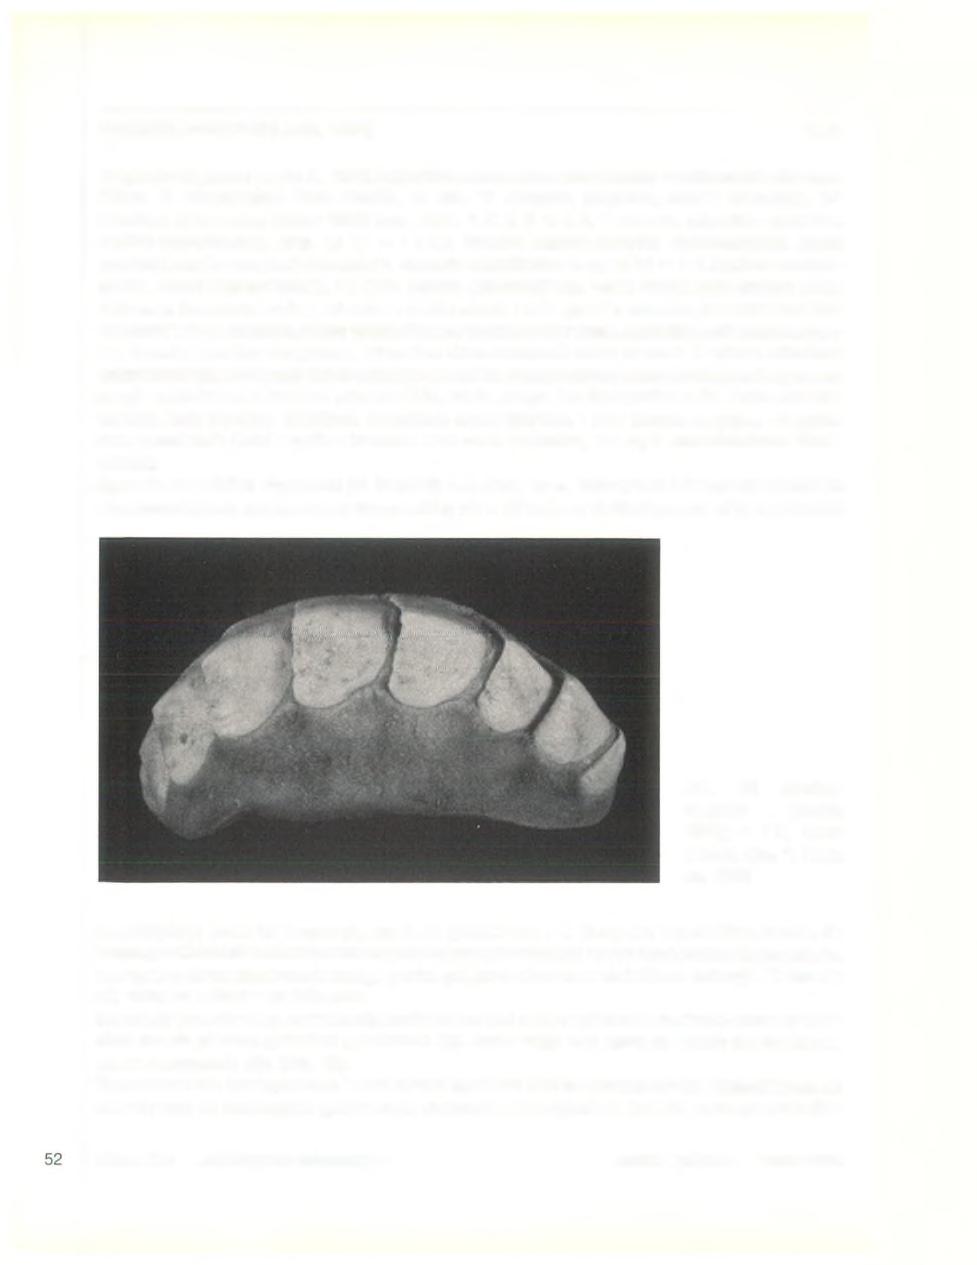 HANLEYA NAGELFAR (Lovén, 1846) 10.01 Originele diagnose: Lovén, S., 1846, Index Molluscorum litorascandinaviaeoccidentalia habitantum, Ofvers. K. Vetenskakad. Pörh. Stockh., 3: 158. "T.